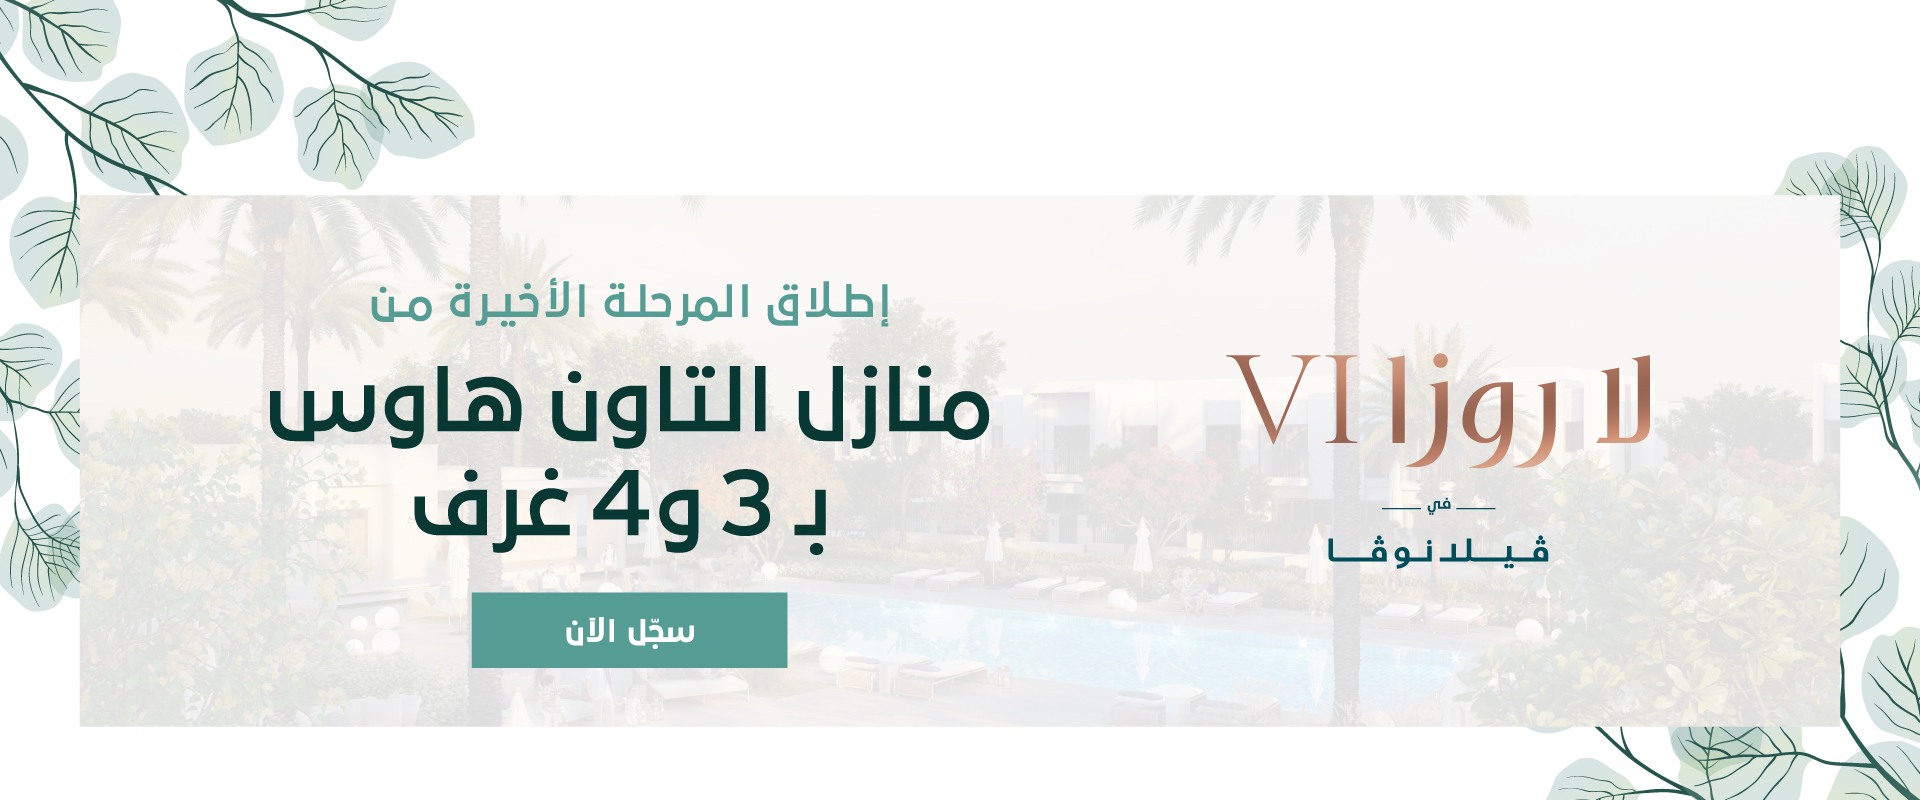 Banner of Villanova LAROSA6/ by Dubai Properties